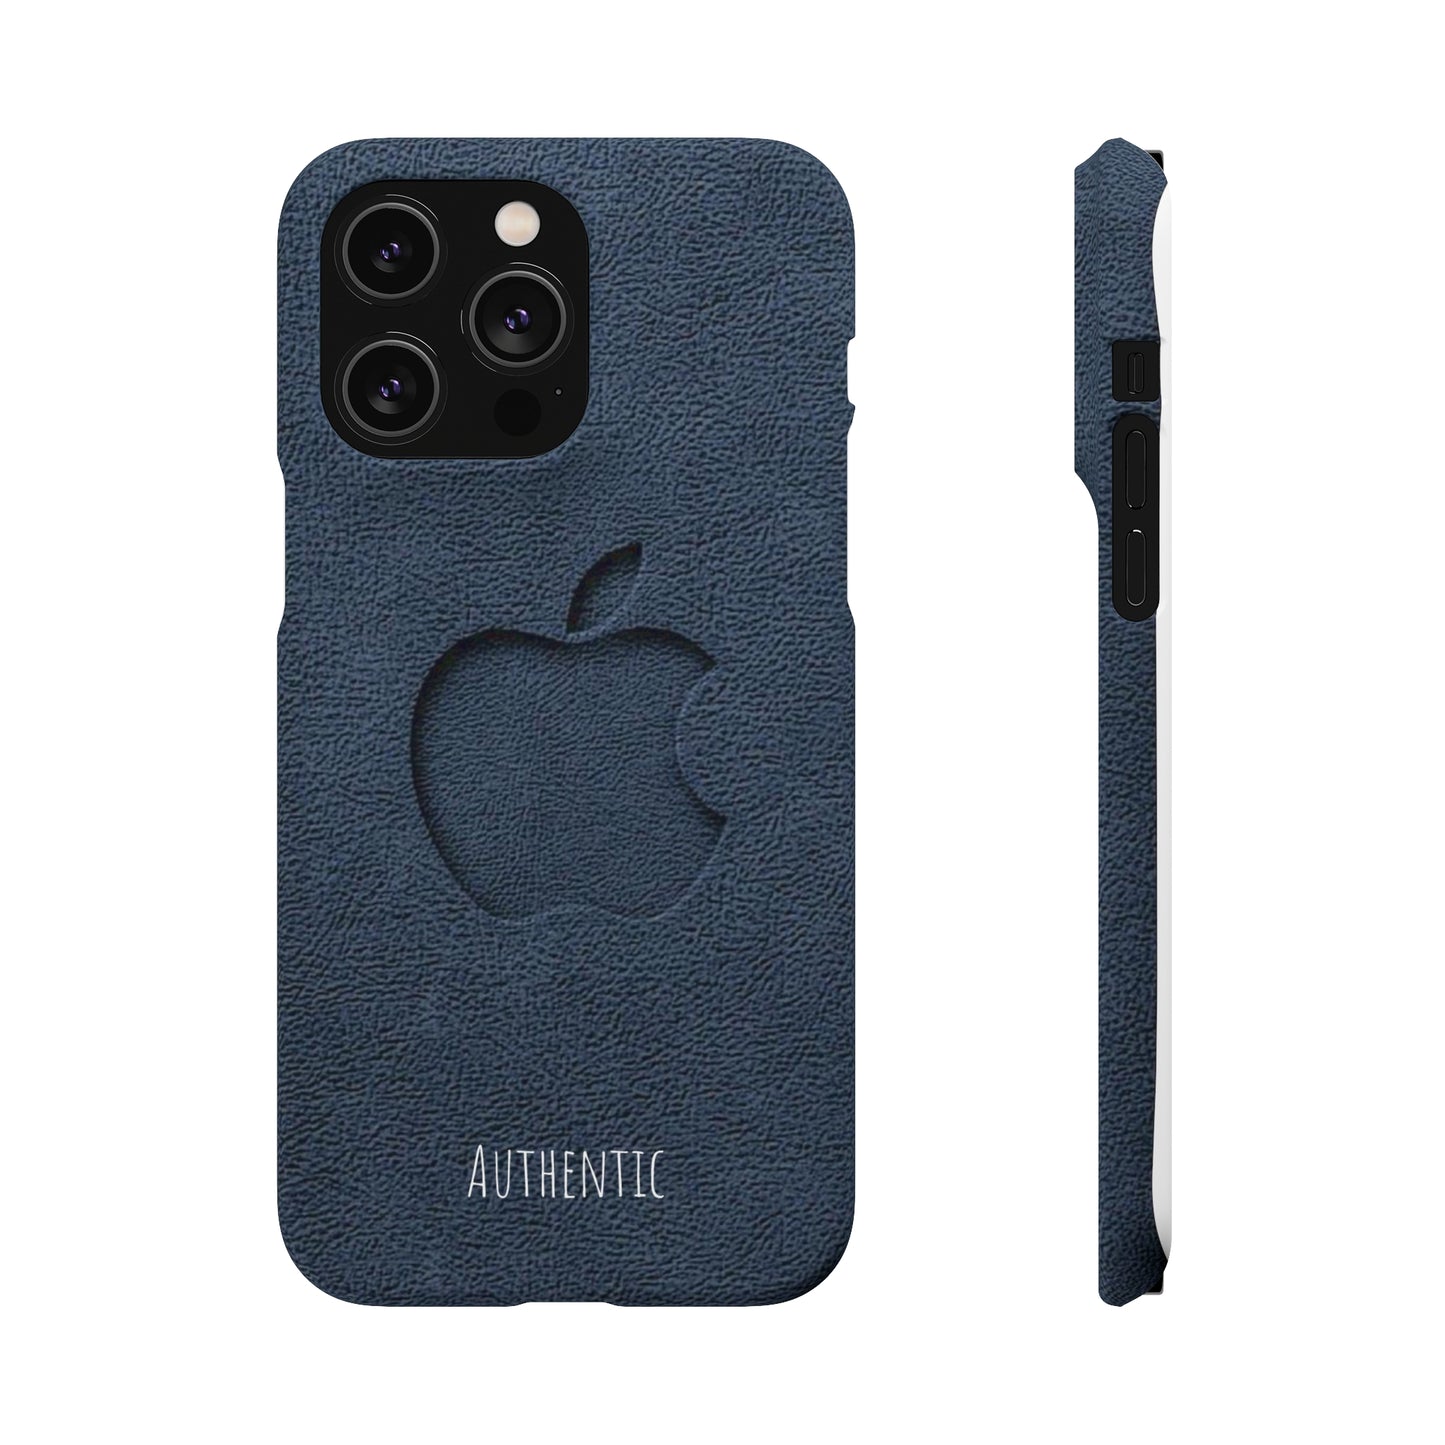 Snap Cases Authentic blue Apple